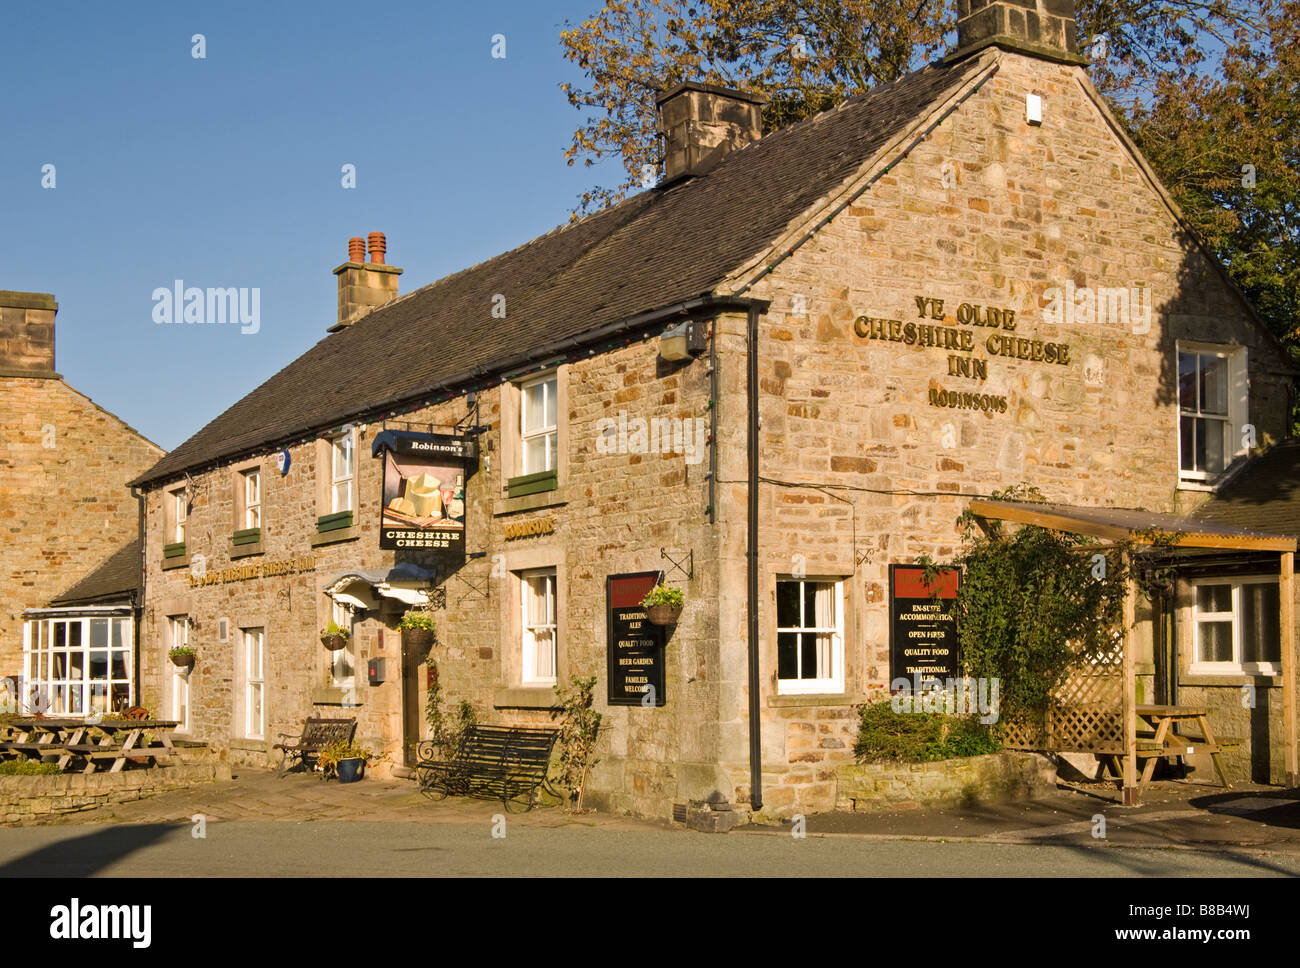 Ye Olde Cheshire Cheese Inn Public House, Village of Longnor, Peak District National Park, Derbyshire, England, UK Stock Photo